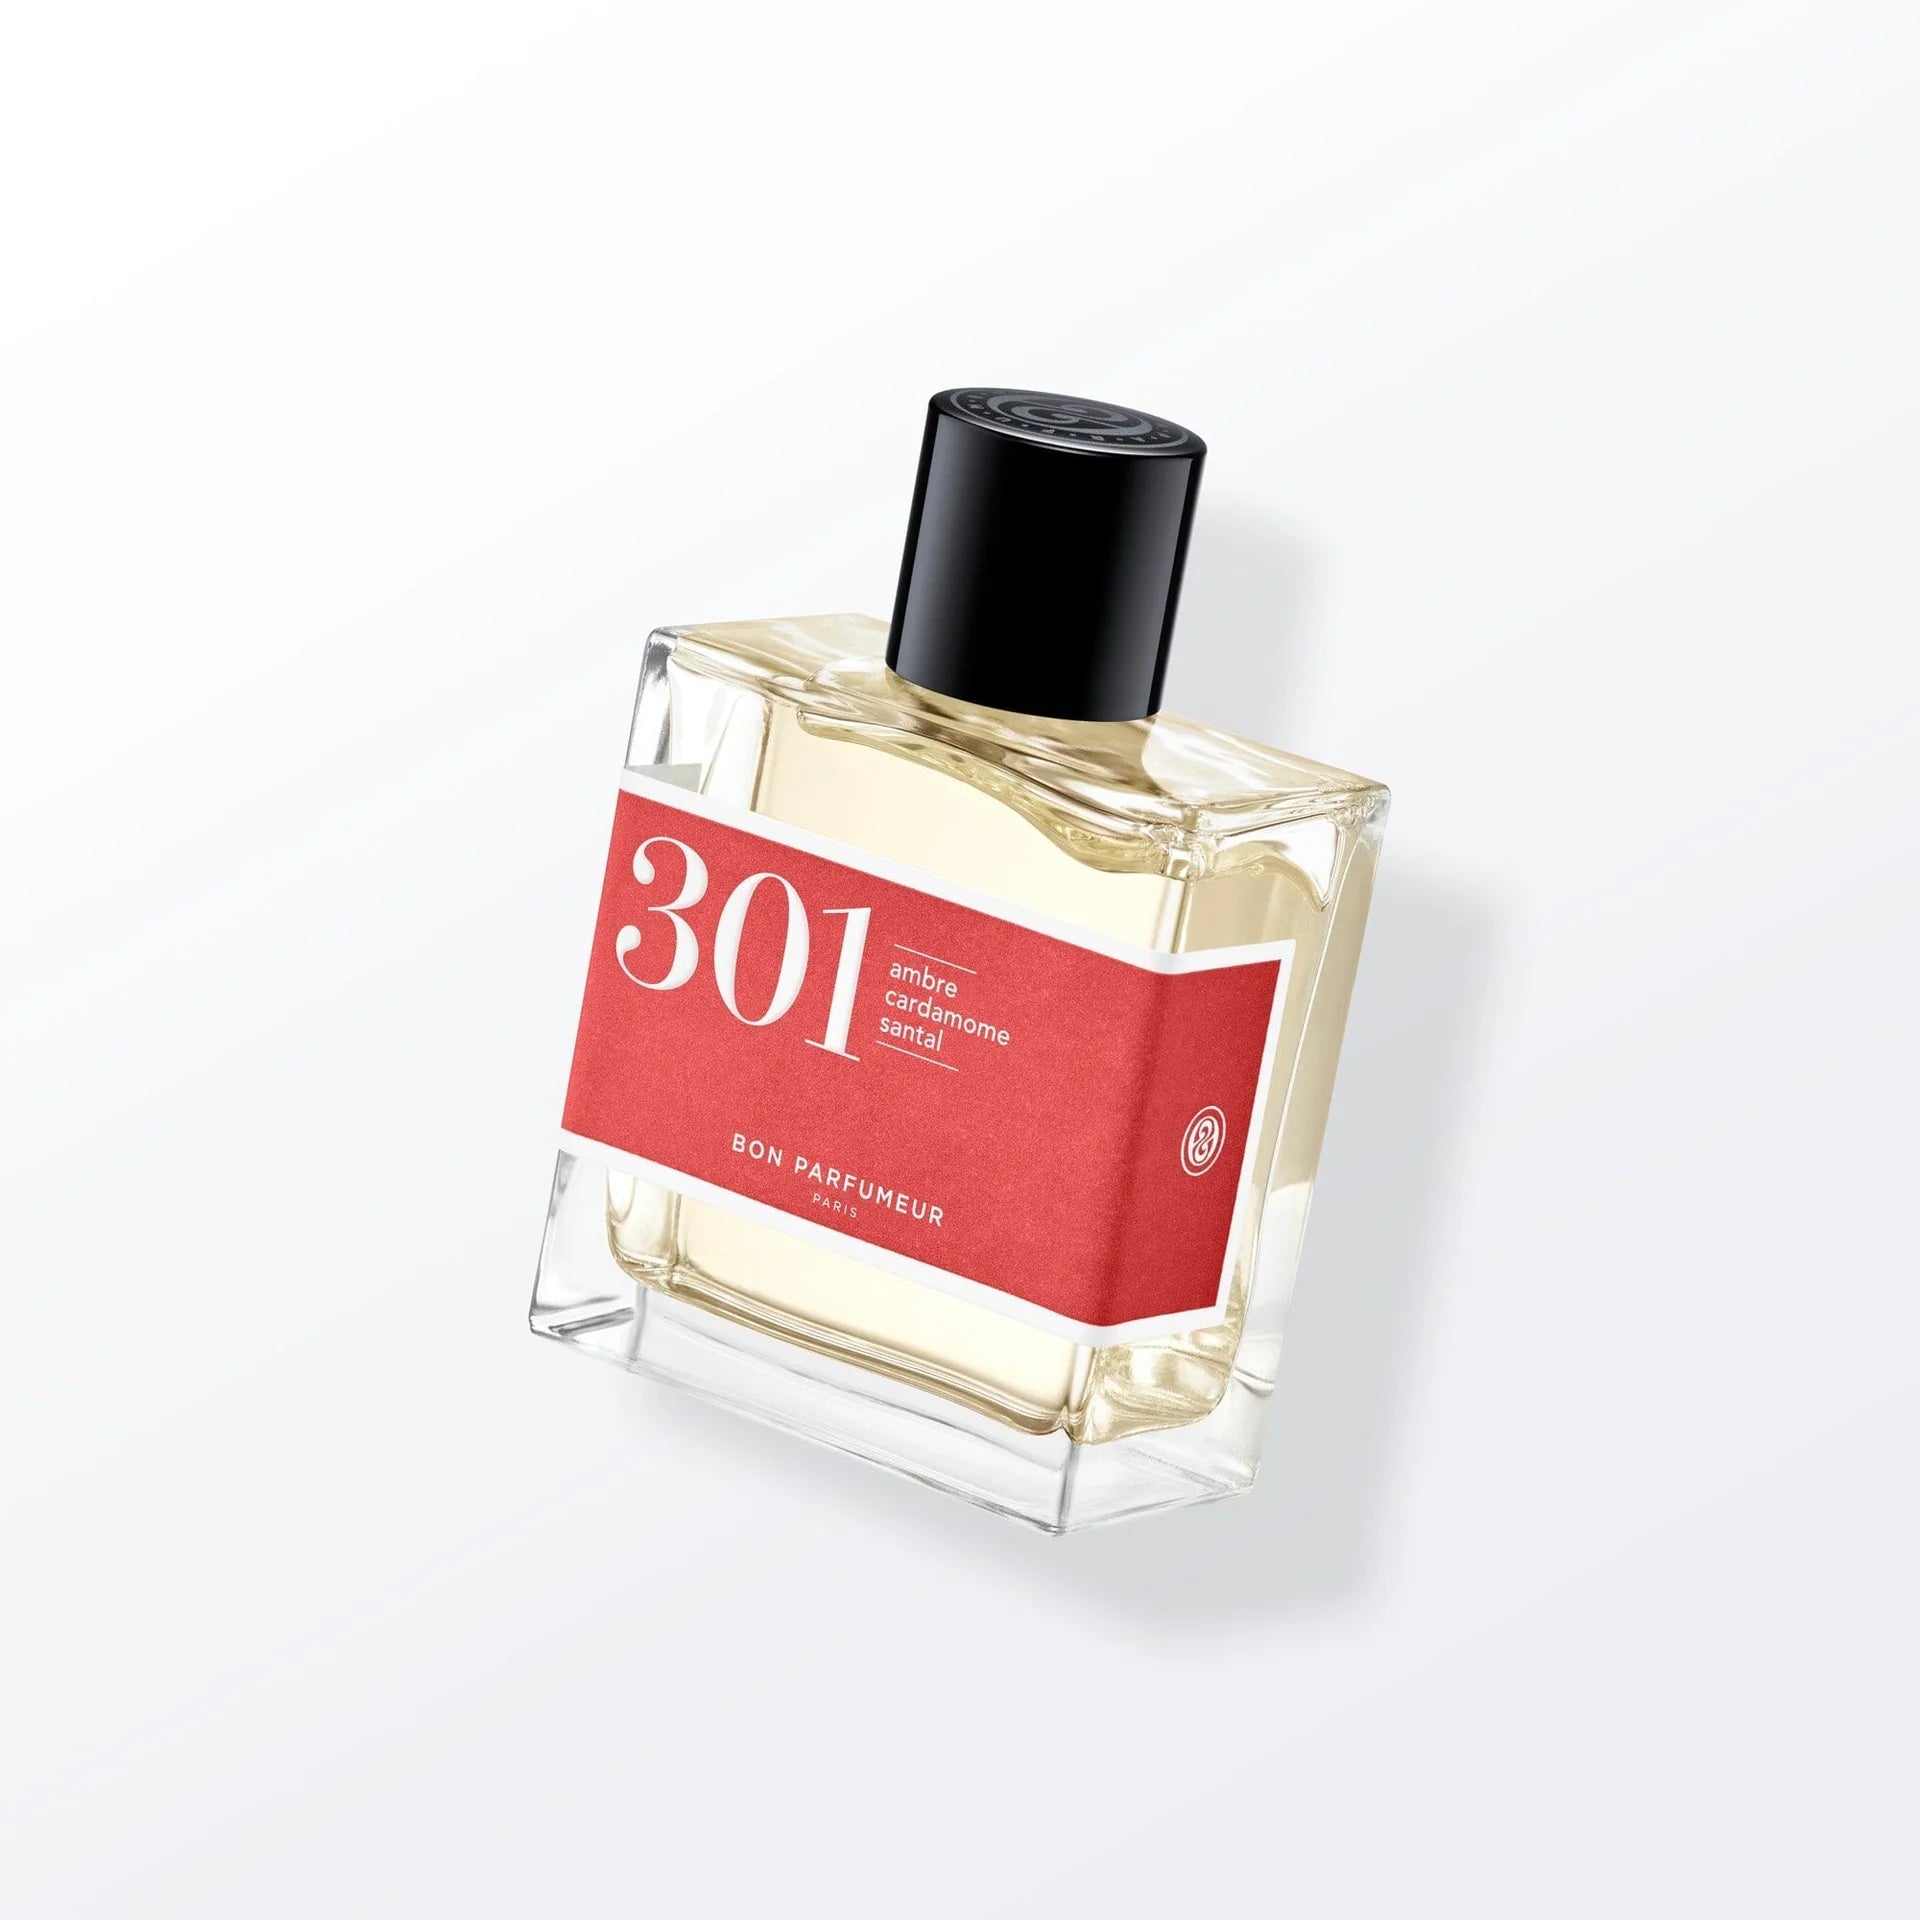 Perfume - Bon Parfumeur - 301